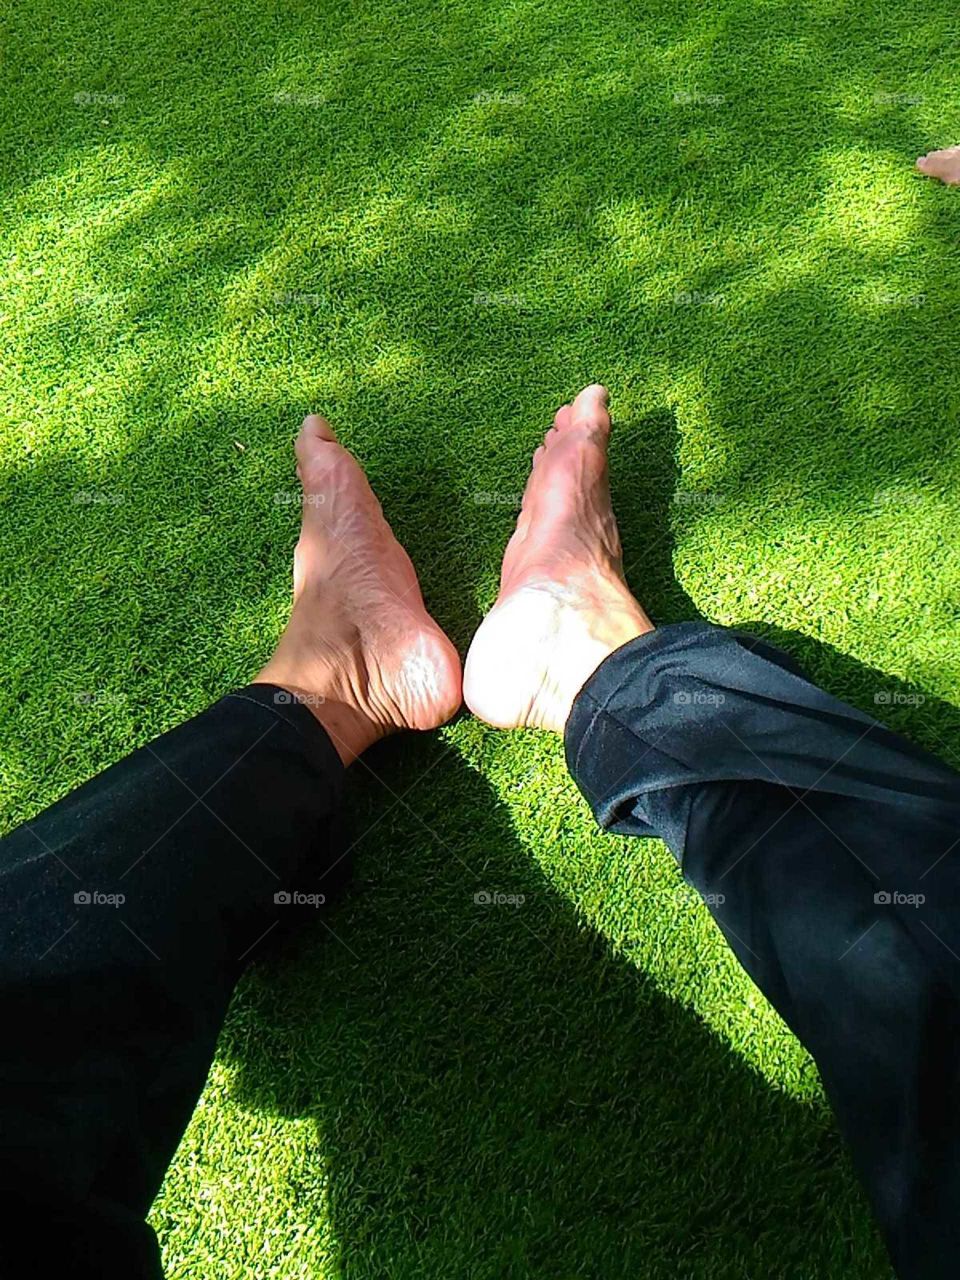 Relaxing of Feet